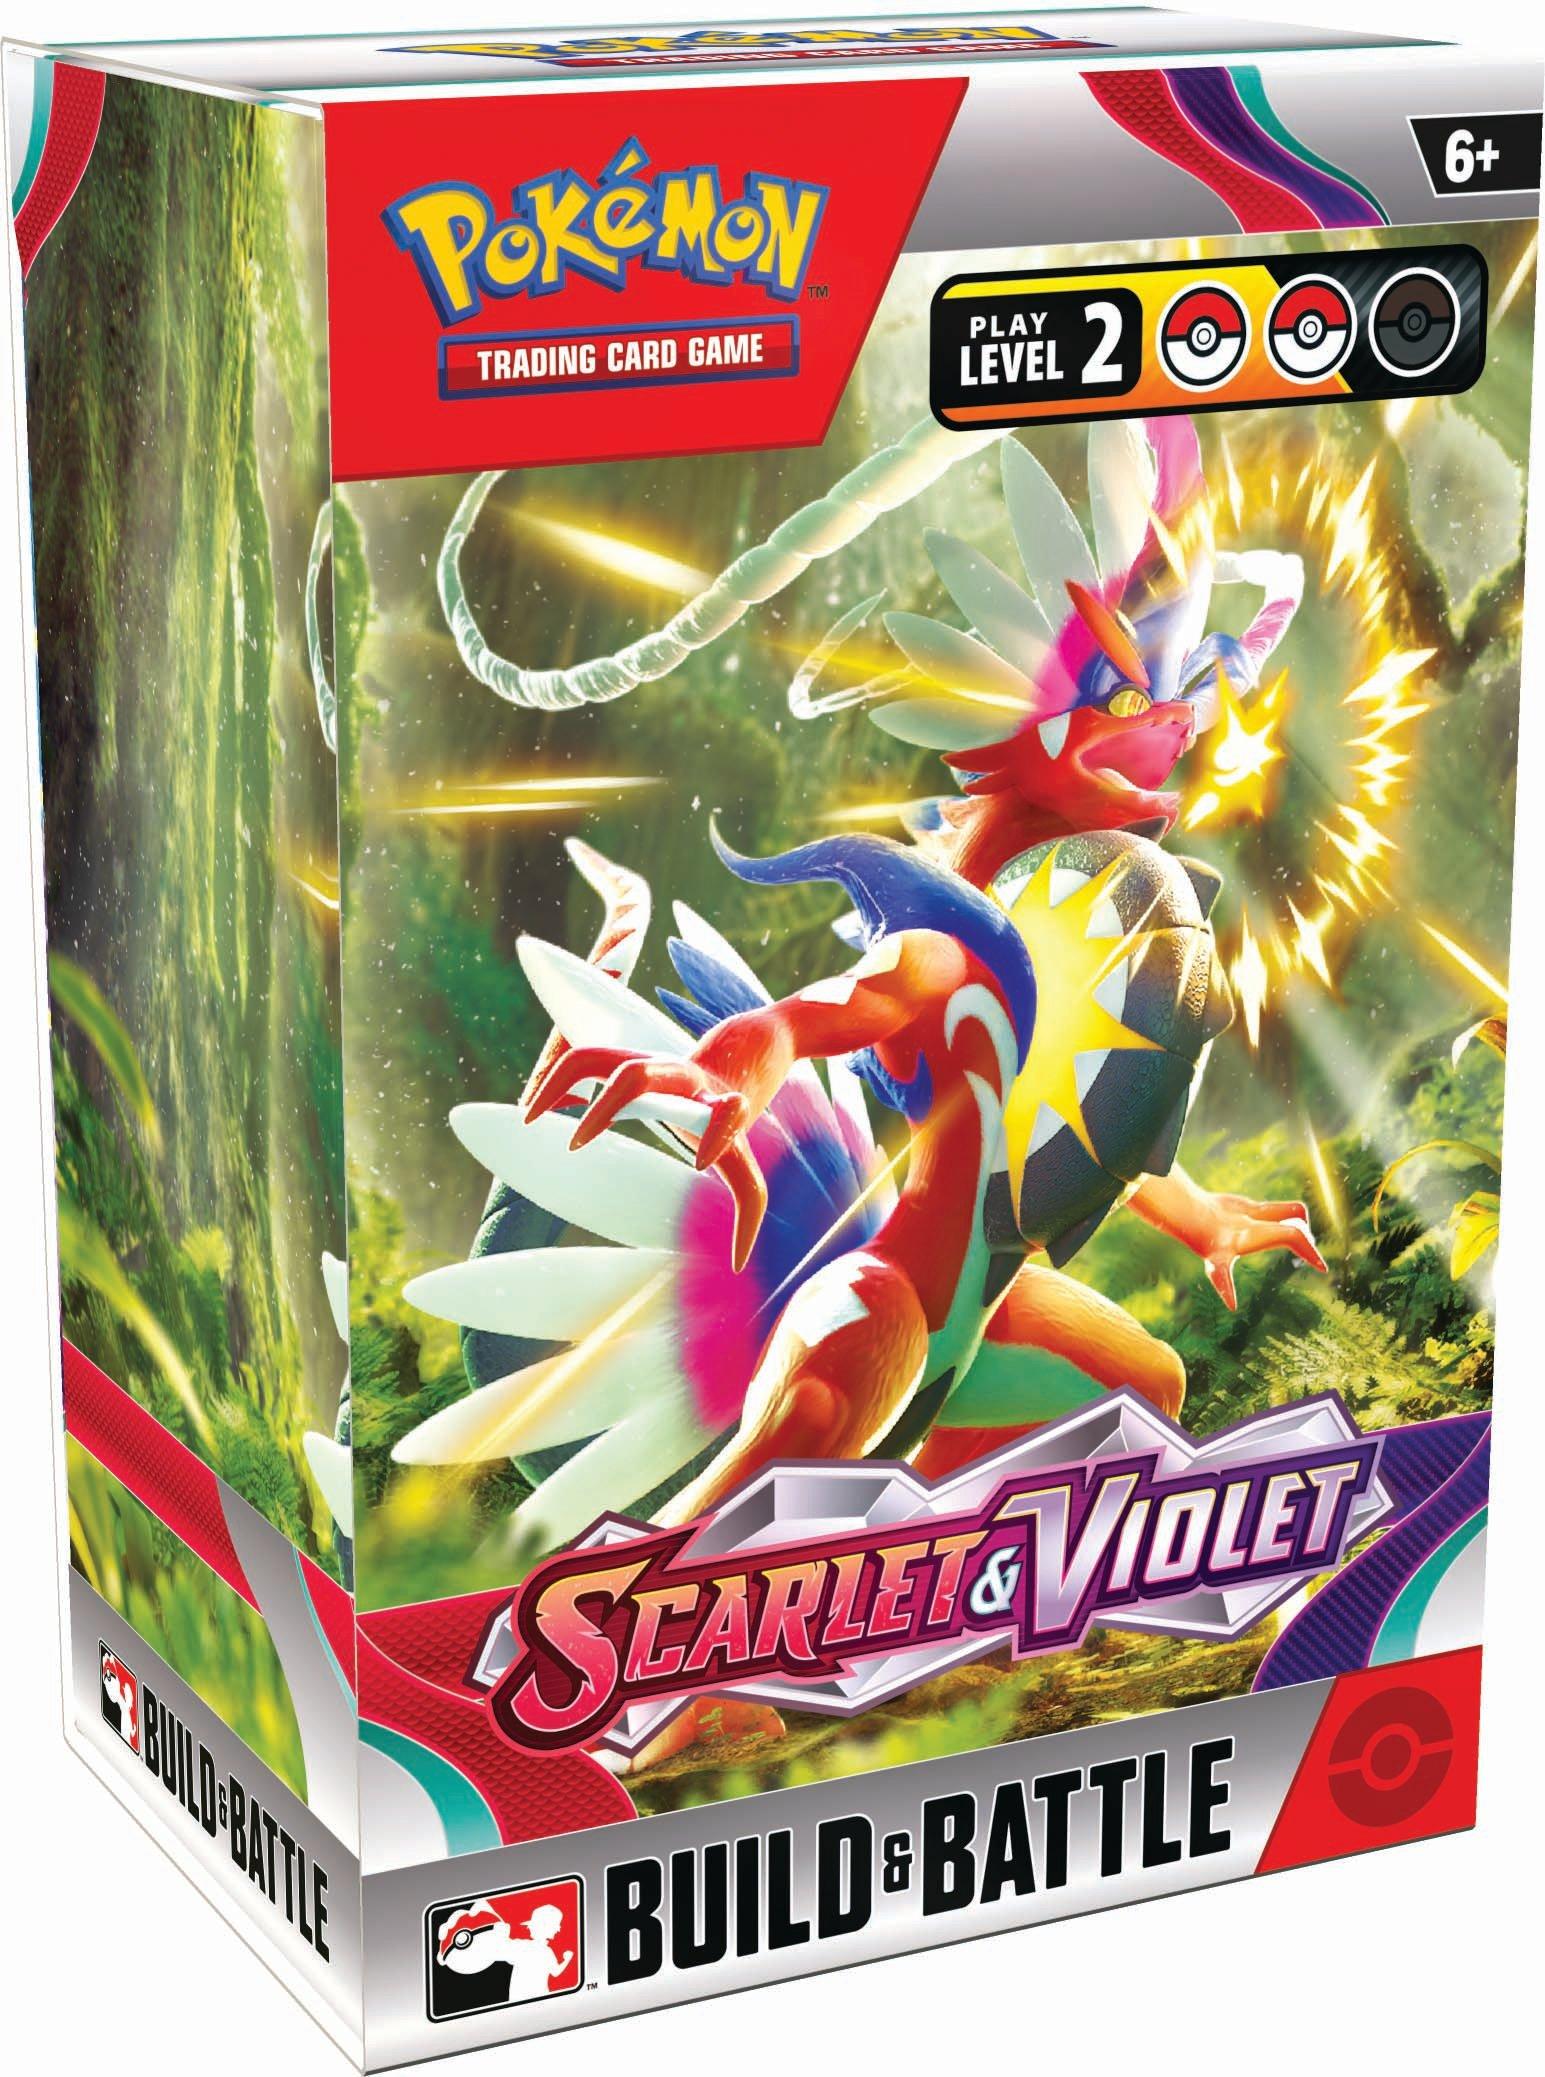 https://media.gamestop.com/i/gamestop/20002523/Pokemon-Trading-Card-Game-Scarlet-and-Violet-Build-and-Battle-Box